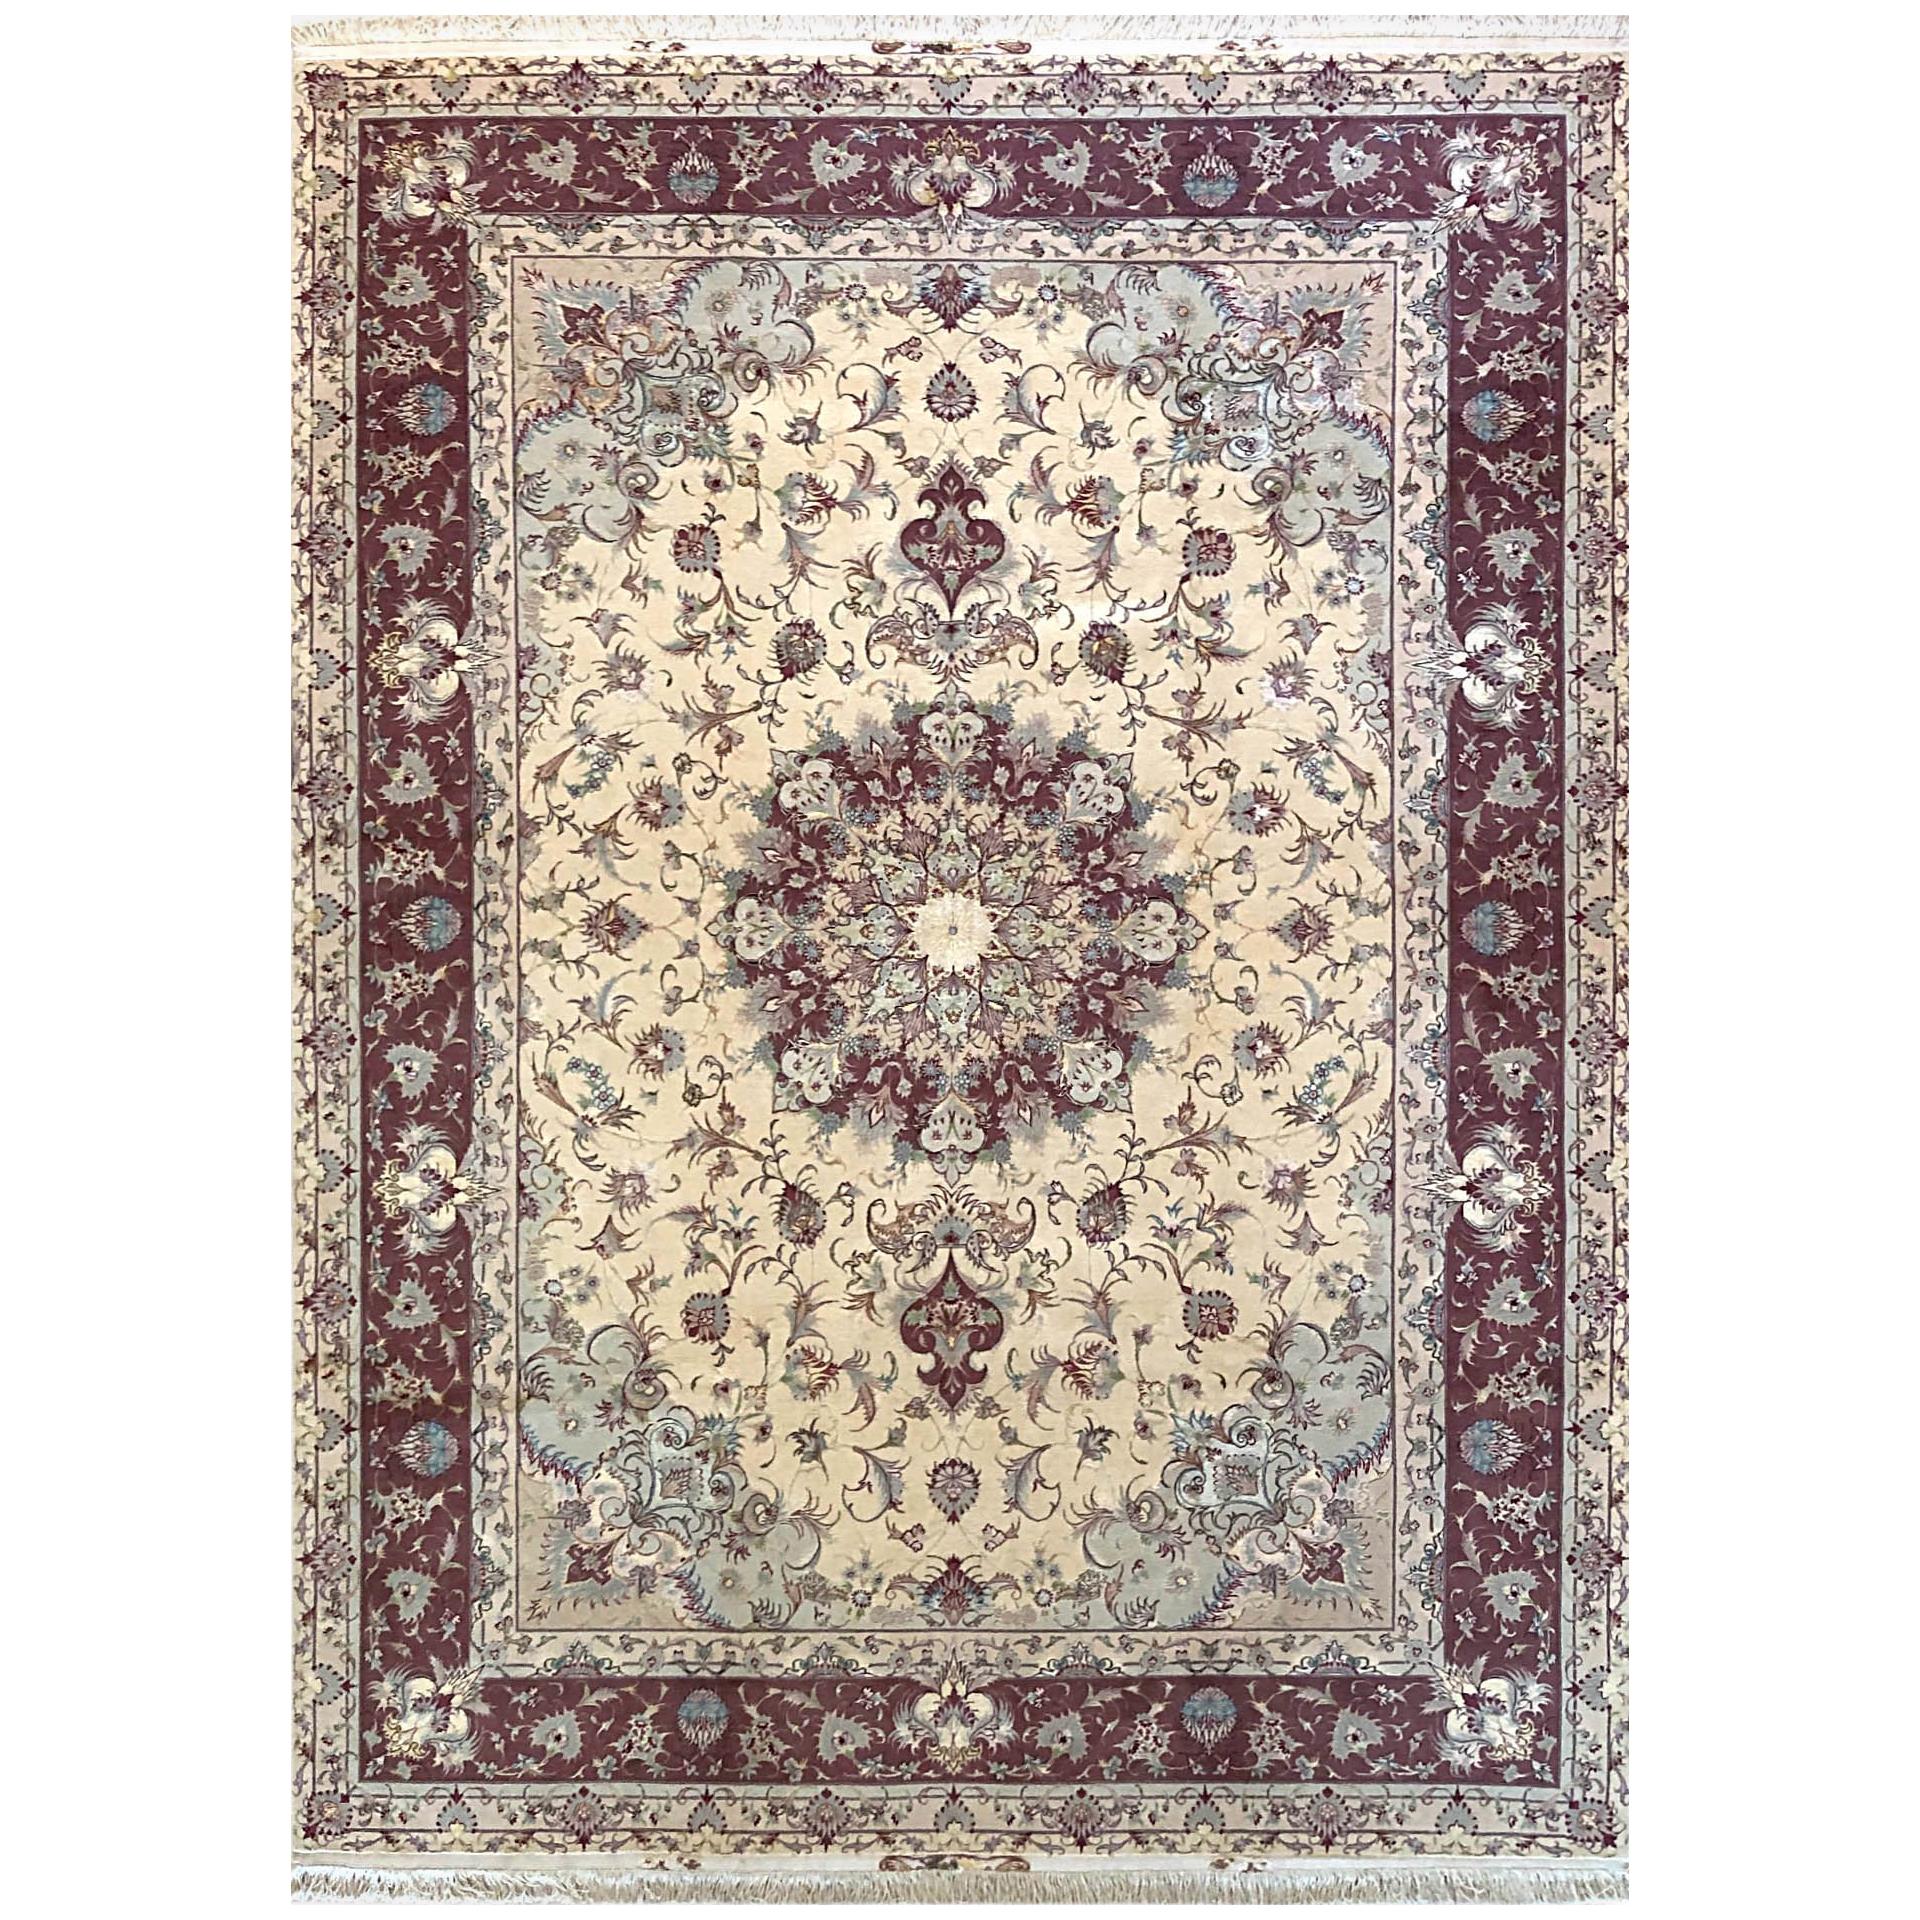 Persischer handgeknüpfter, geblümter Medaillon-Teppich aus cremefarbener Seide aus Täbris